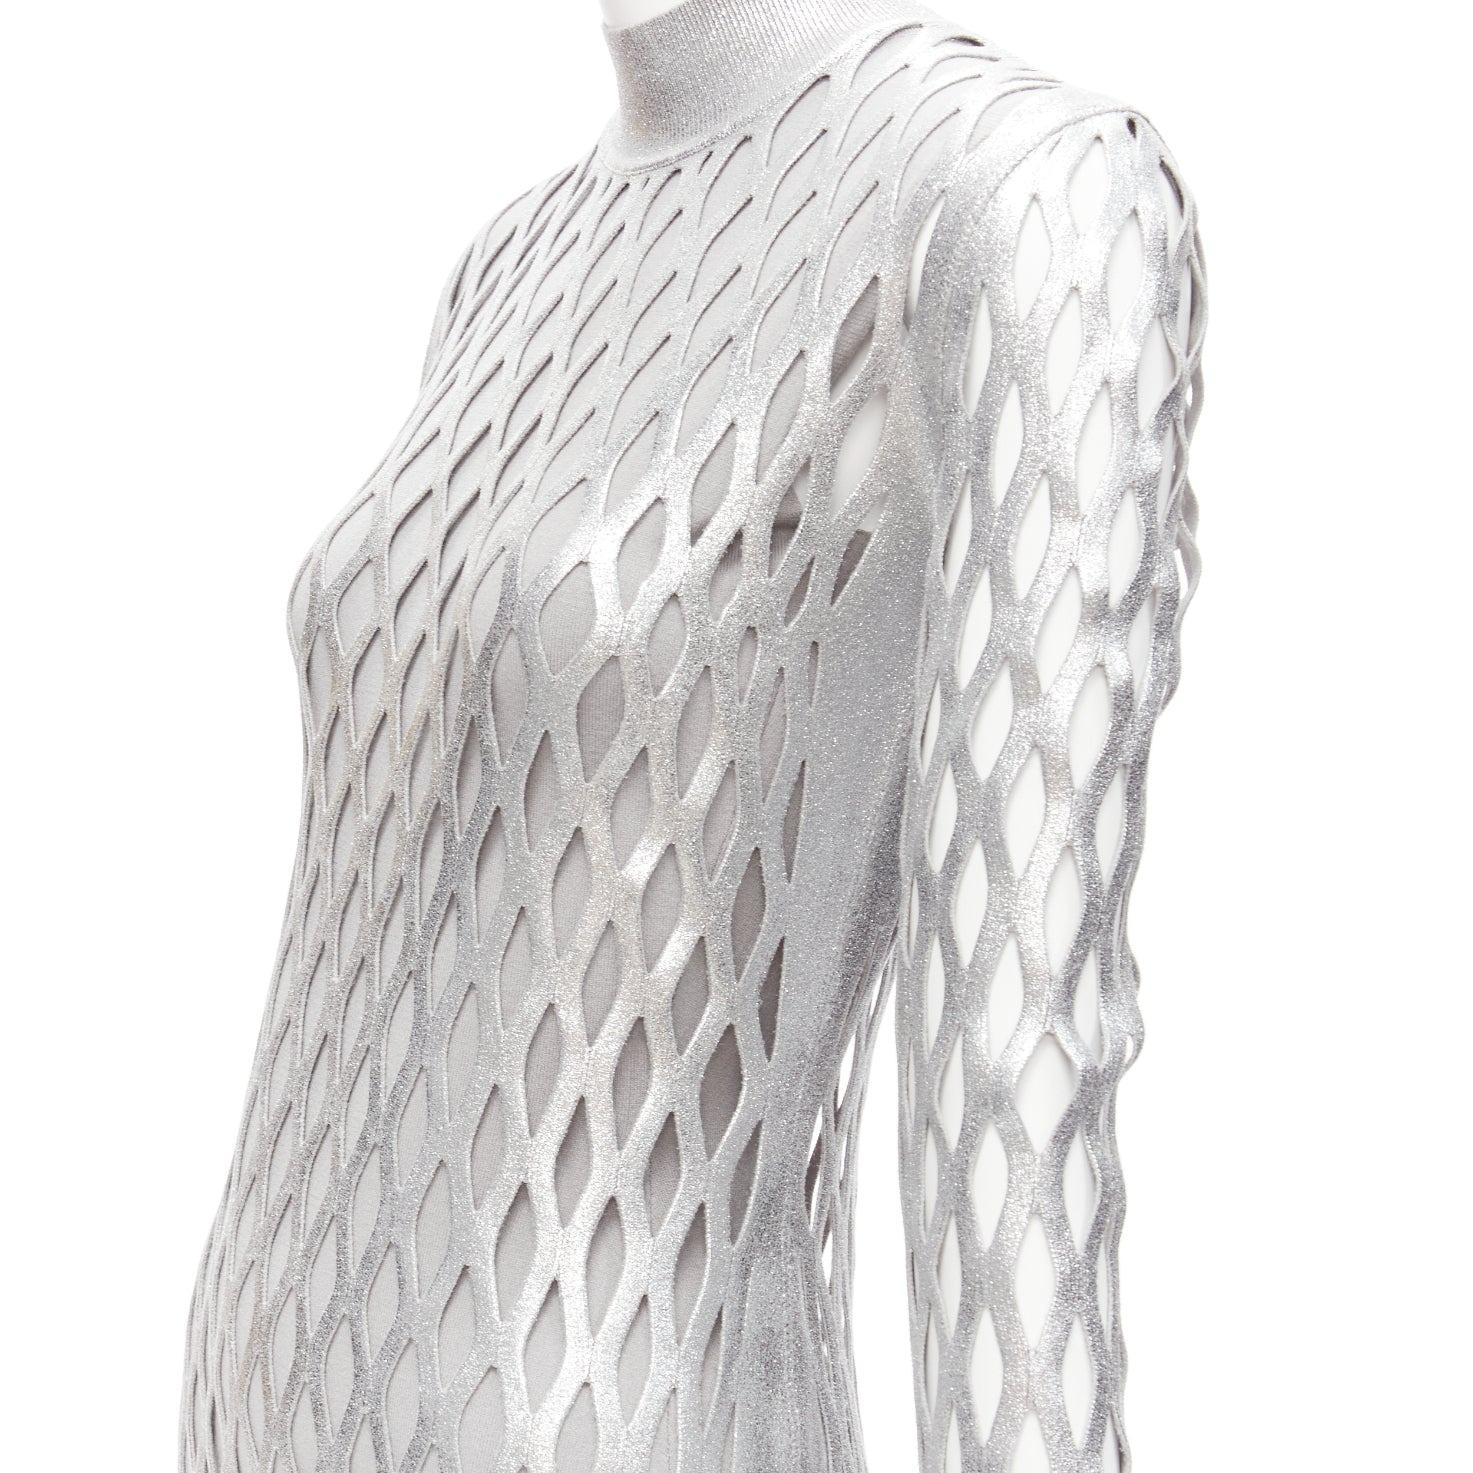 new FENDI Nicki Minaj 2019 Runway Abito silver net cut out lined dress IT42 M For Sale 2